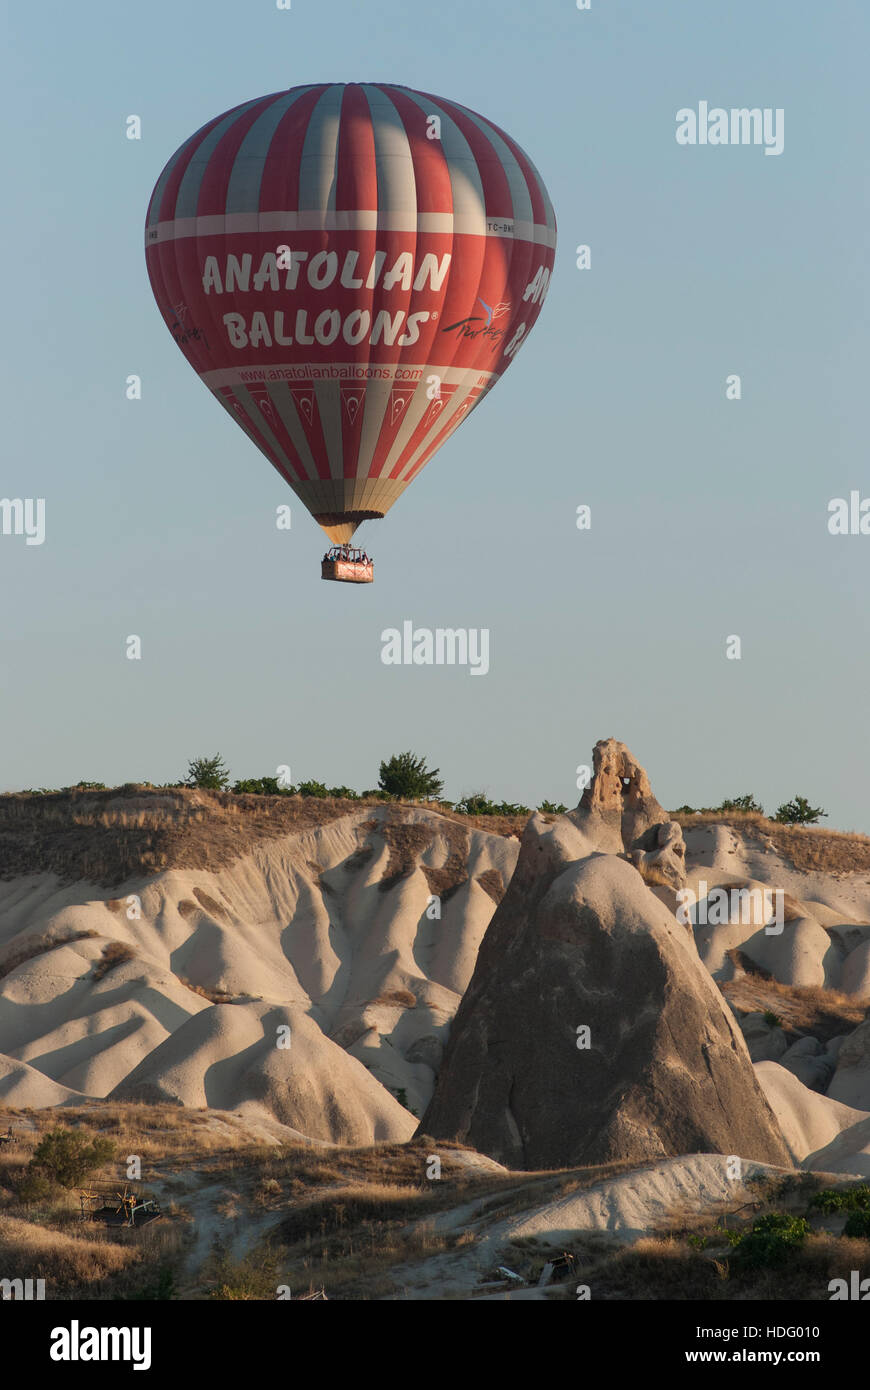 Anatolian Balloons hot air balloon floats over the outlandish, sculpted landscape of Cappadocia. Stock Photo